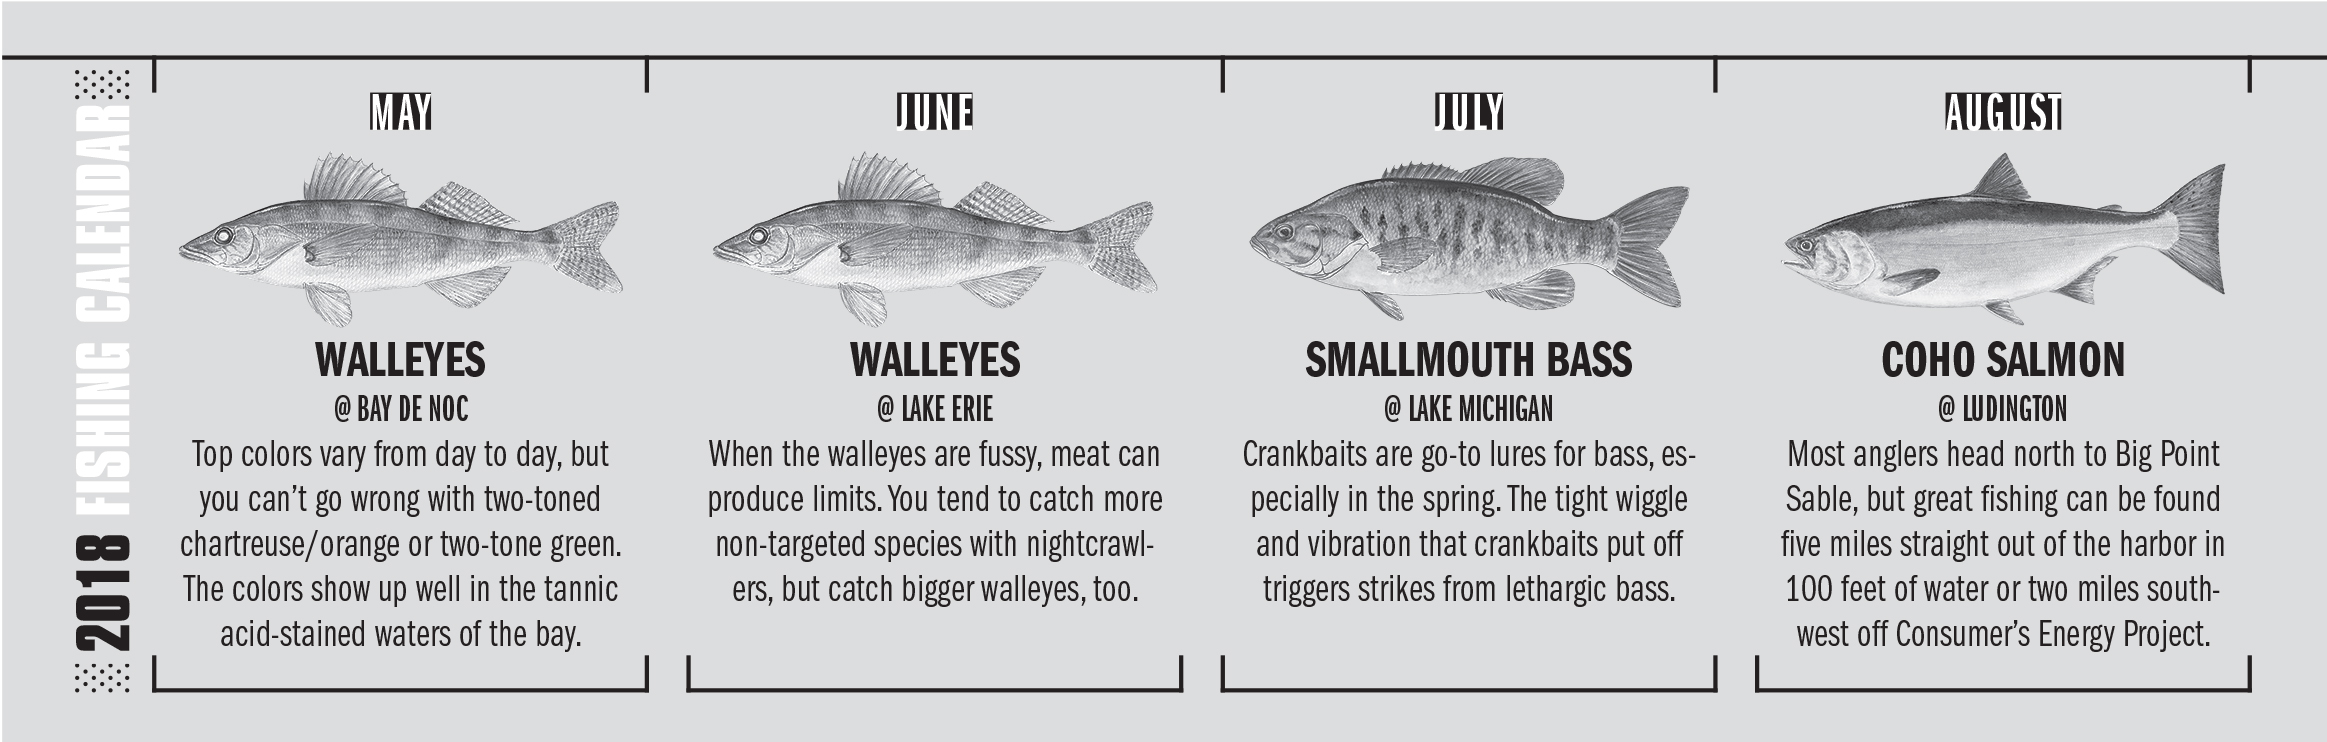 2018 Michigan Fishing Calendar Game & Fish